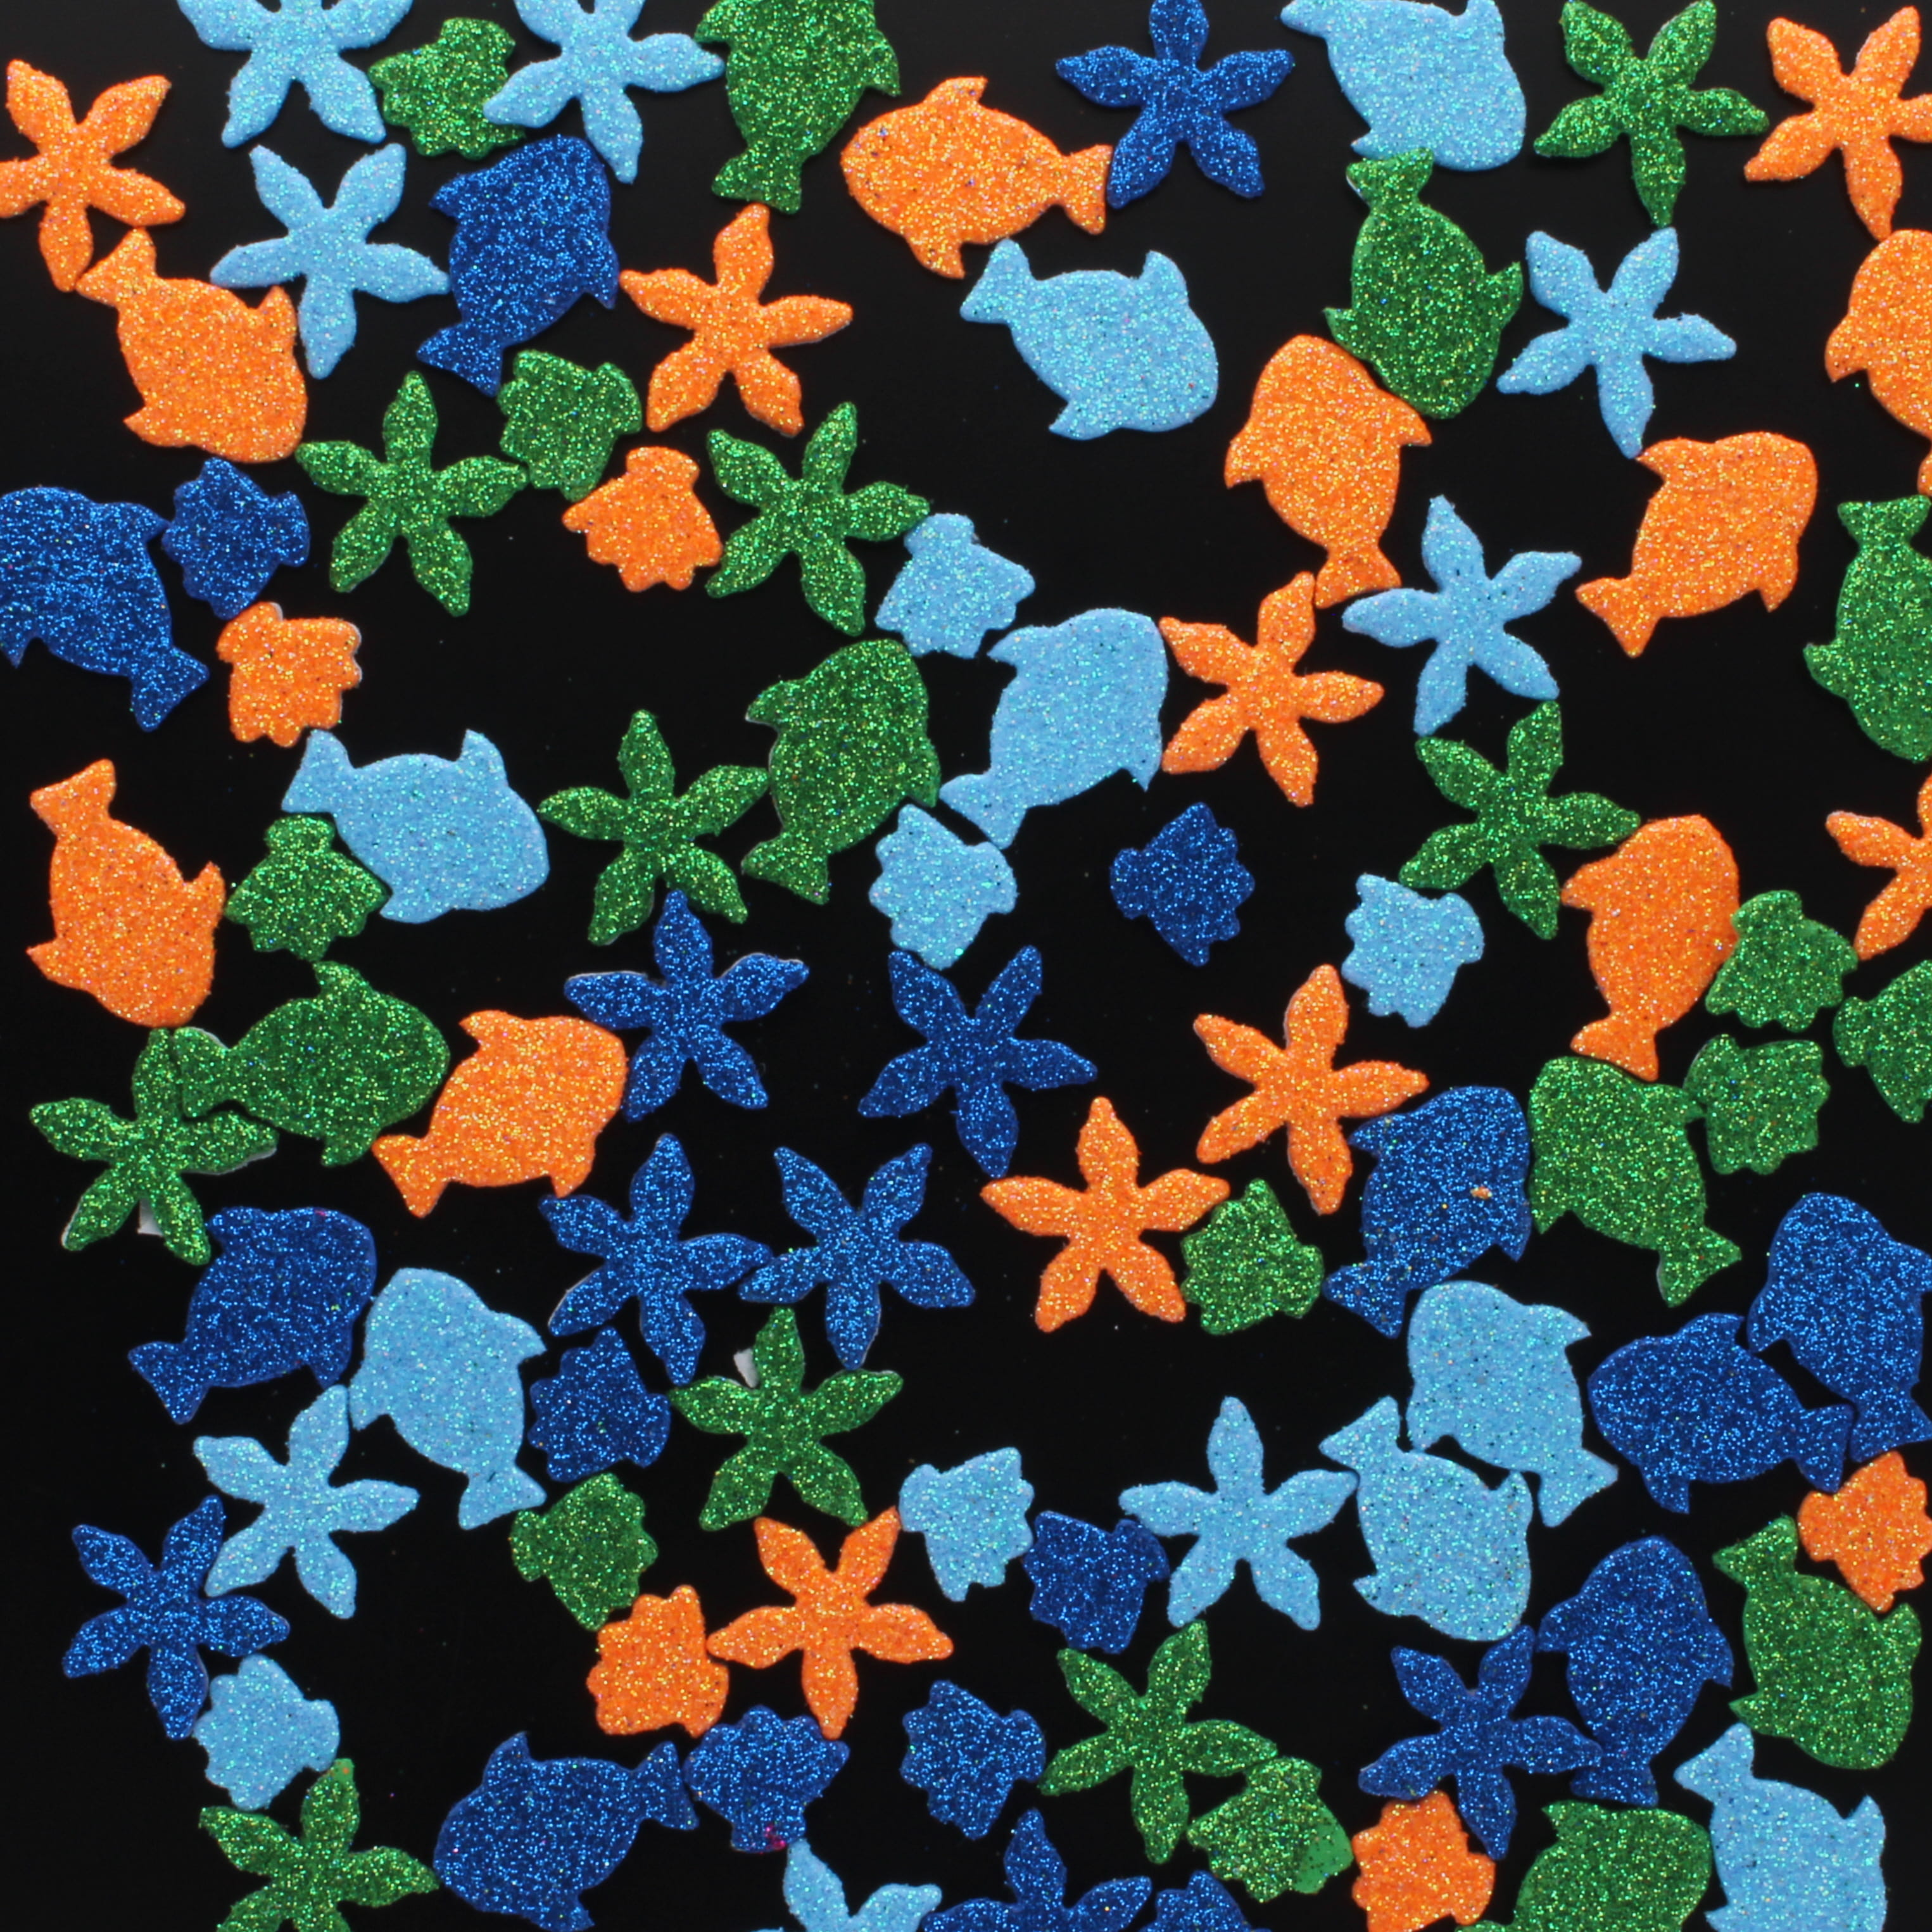 Foam Stickers Glittery Under the Sea - pack of 100 - STC102SE